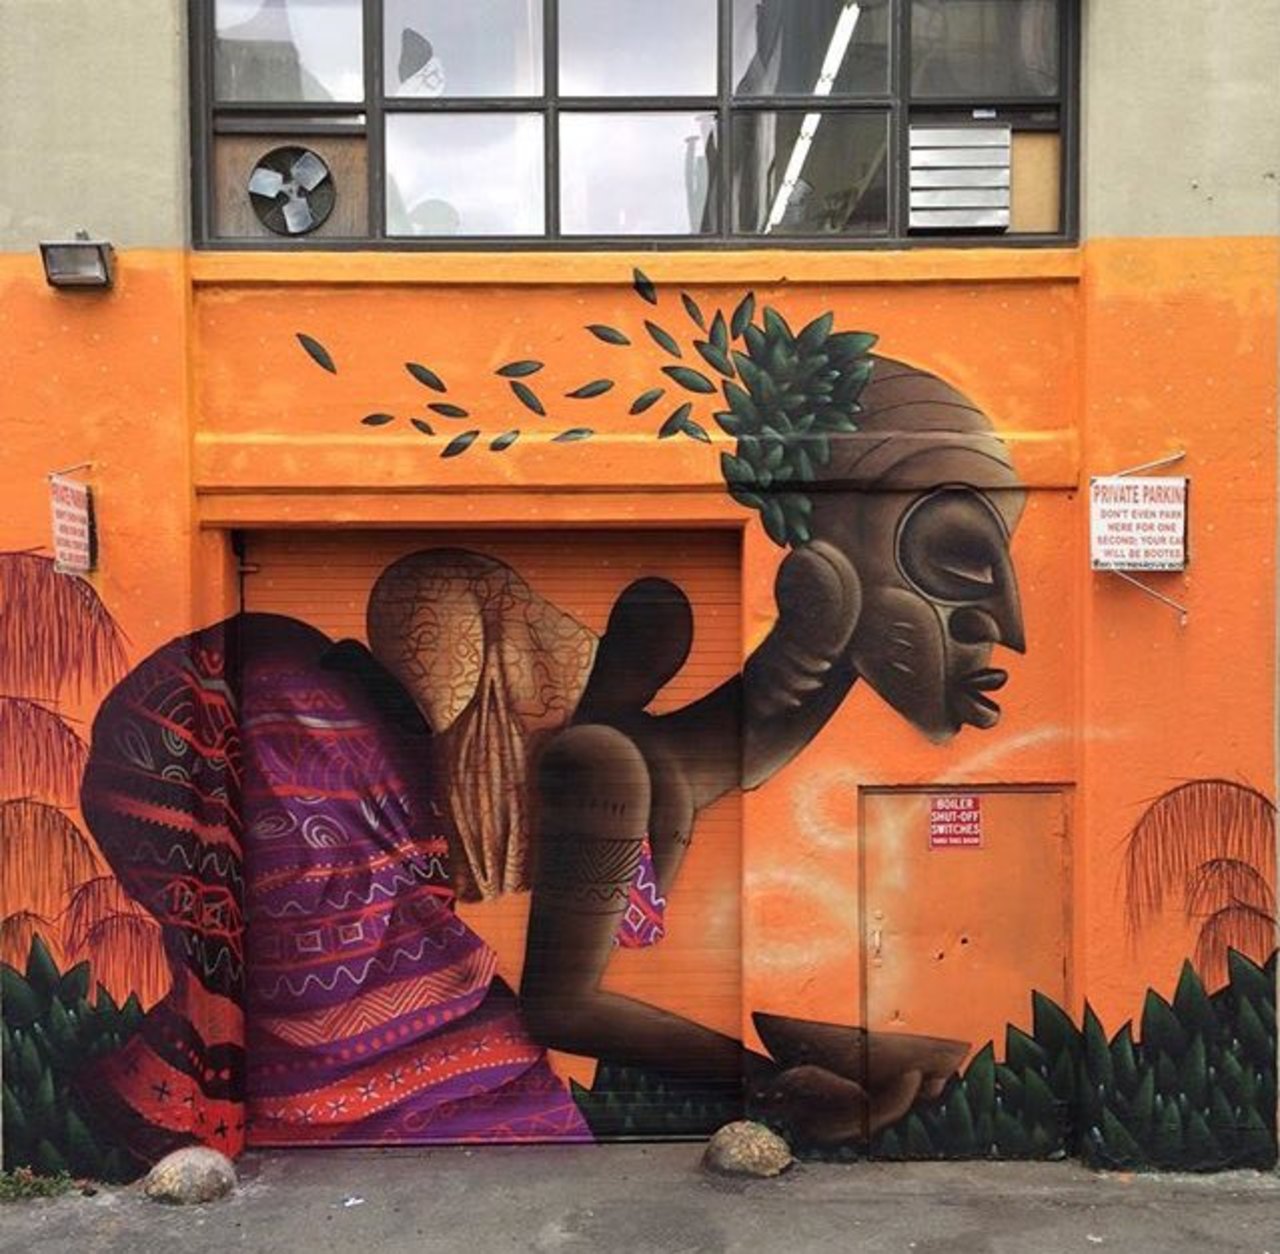 RT @DirectorEddLiu: New Street Art by Alexandre Keto in NYC 

#art #graffiti #mural #streetart https://t.co/K5K18lrnMw